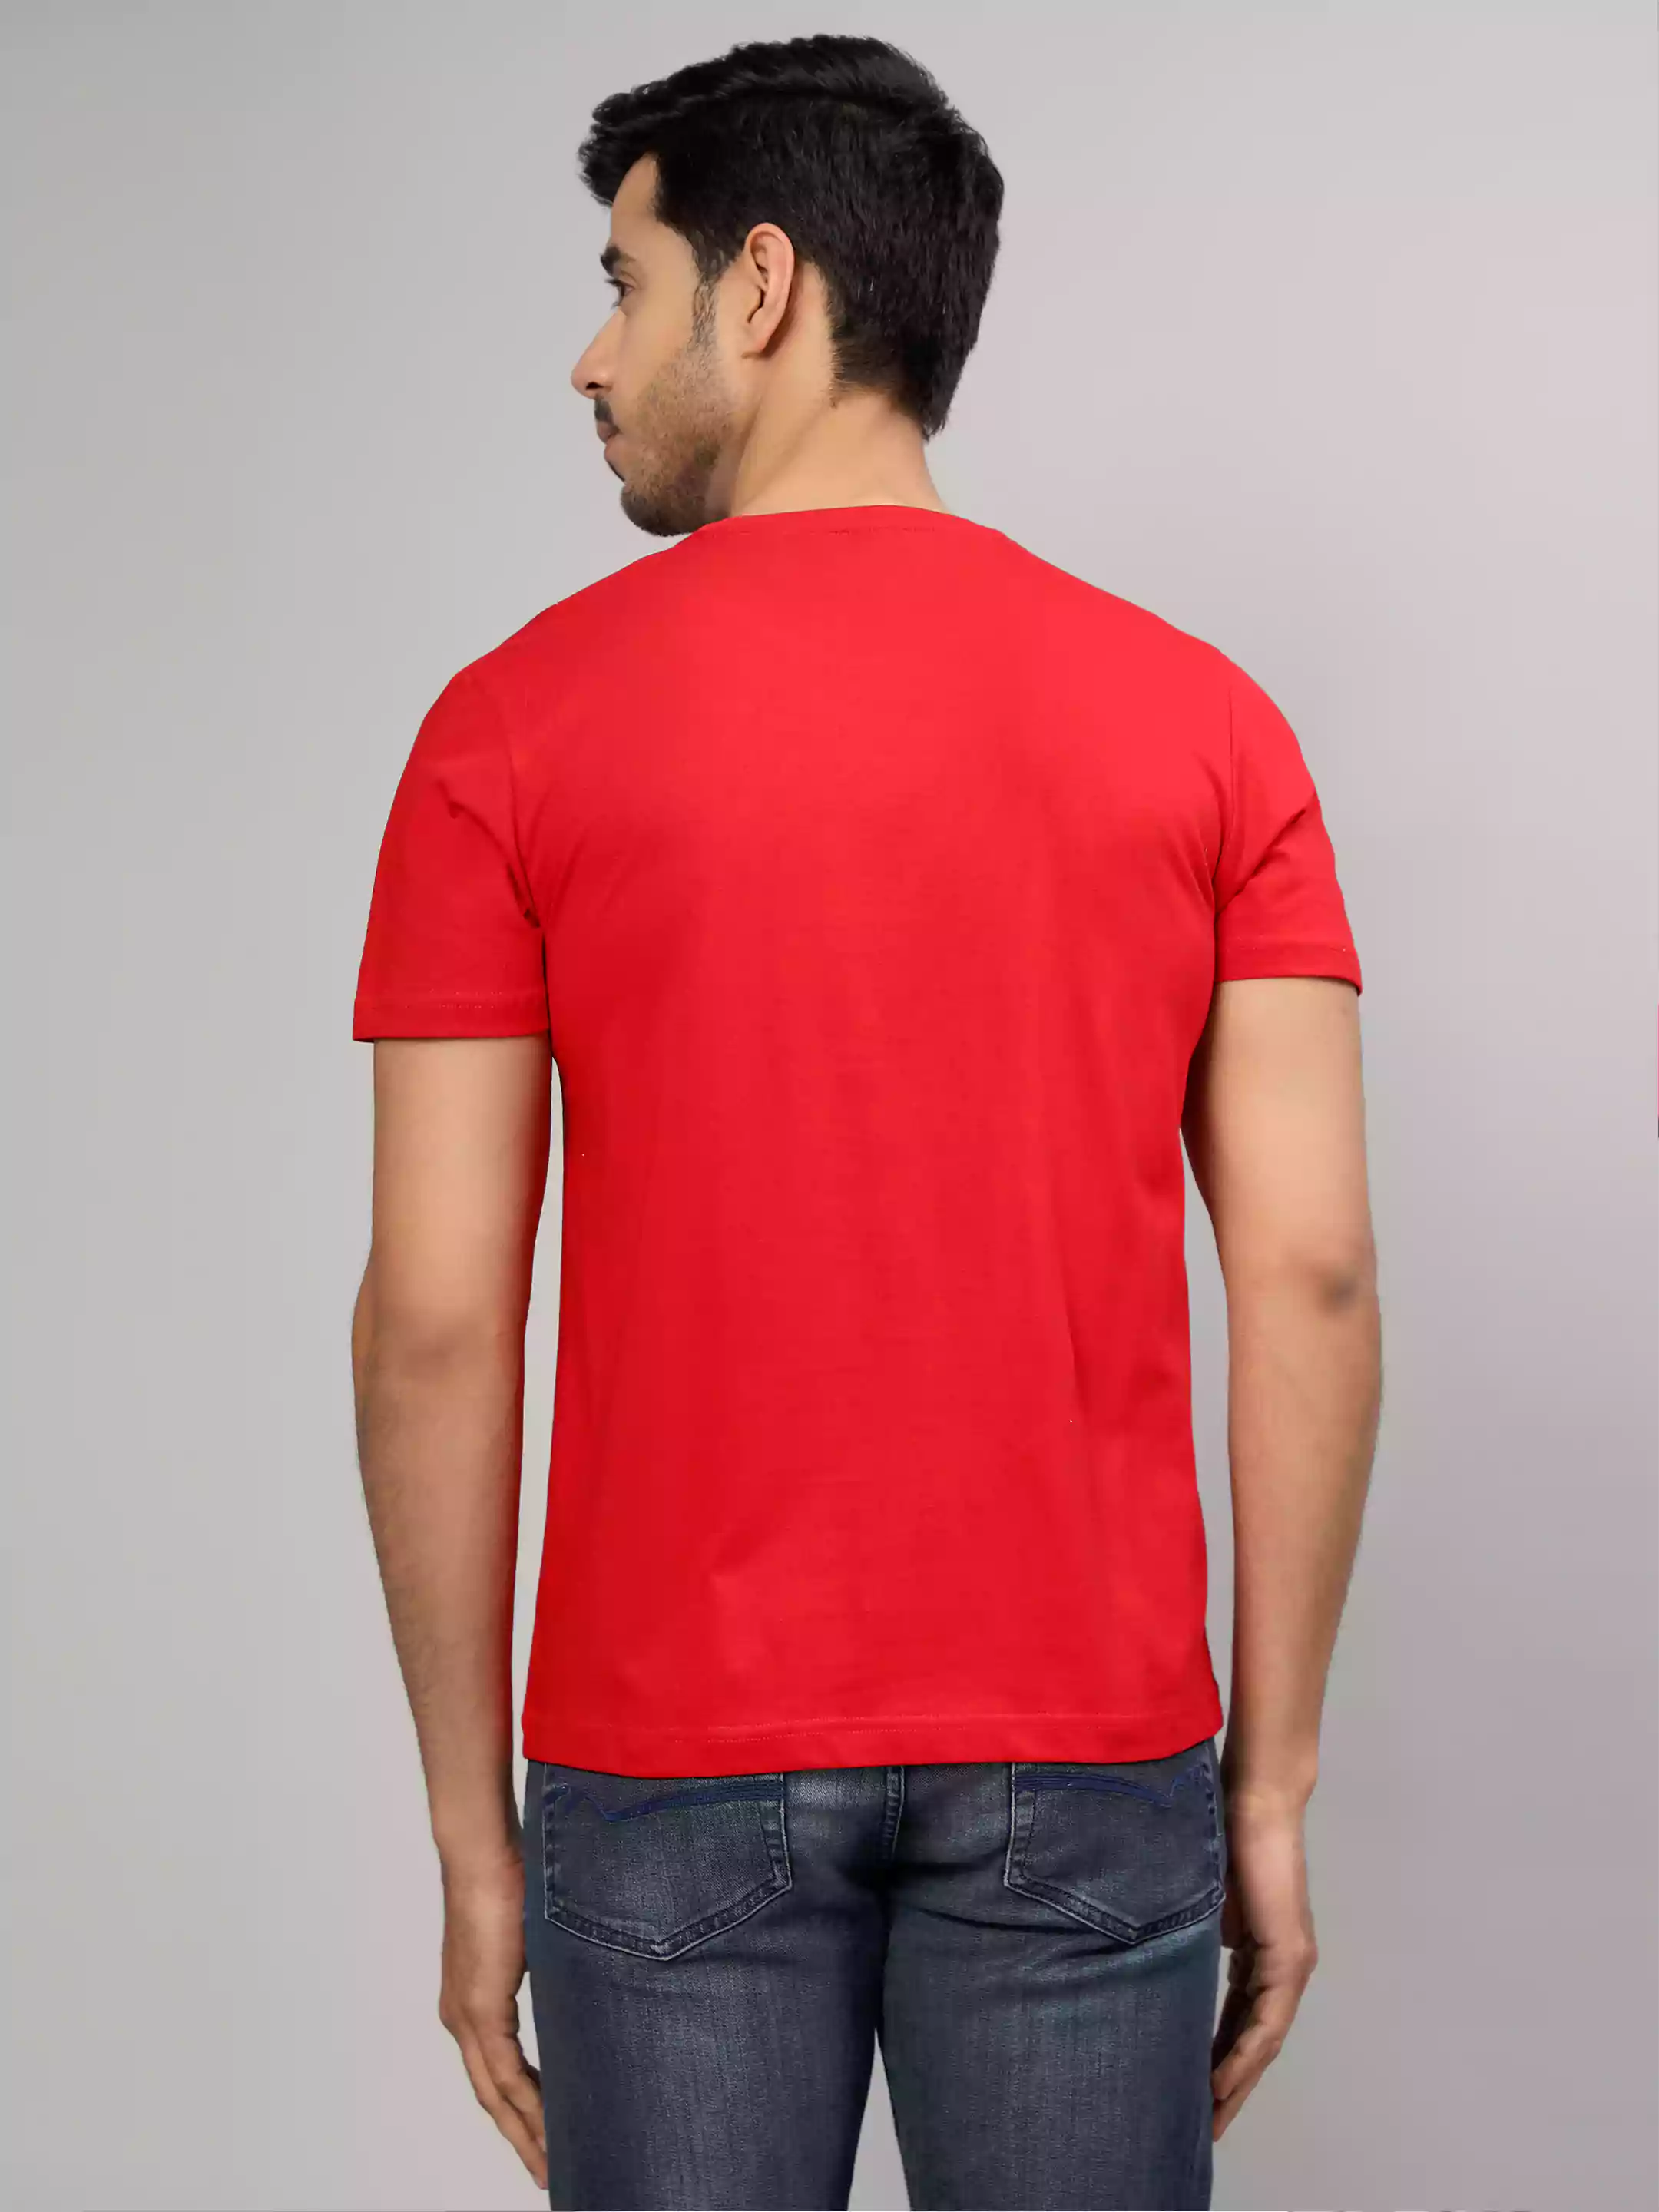 Hangover T-shirt - Sukhiaatma Unisex Graphic Printed Red T-shirt